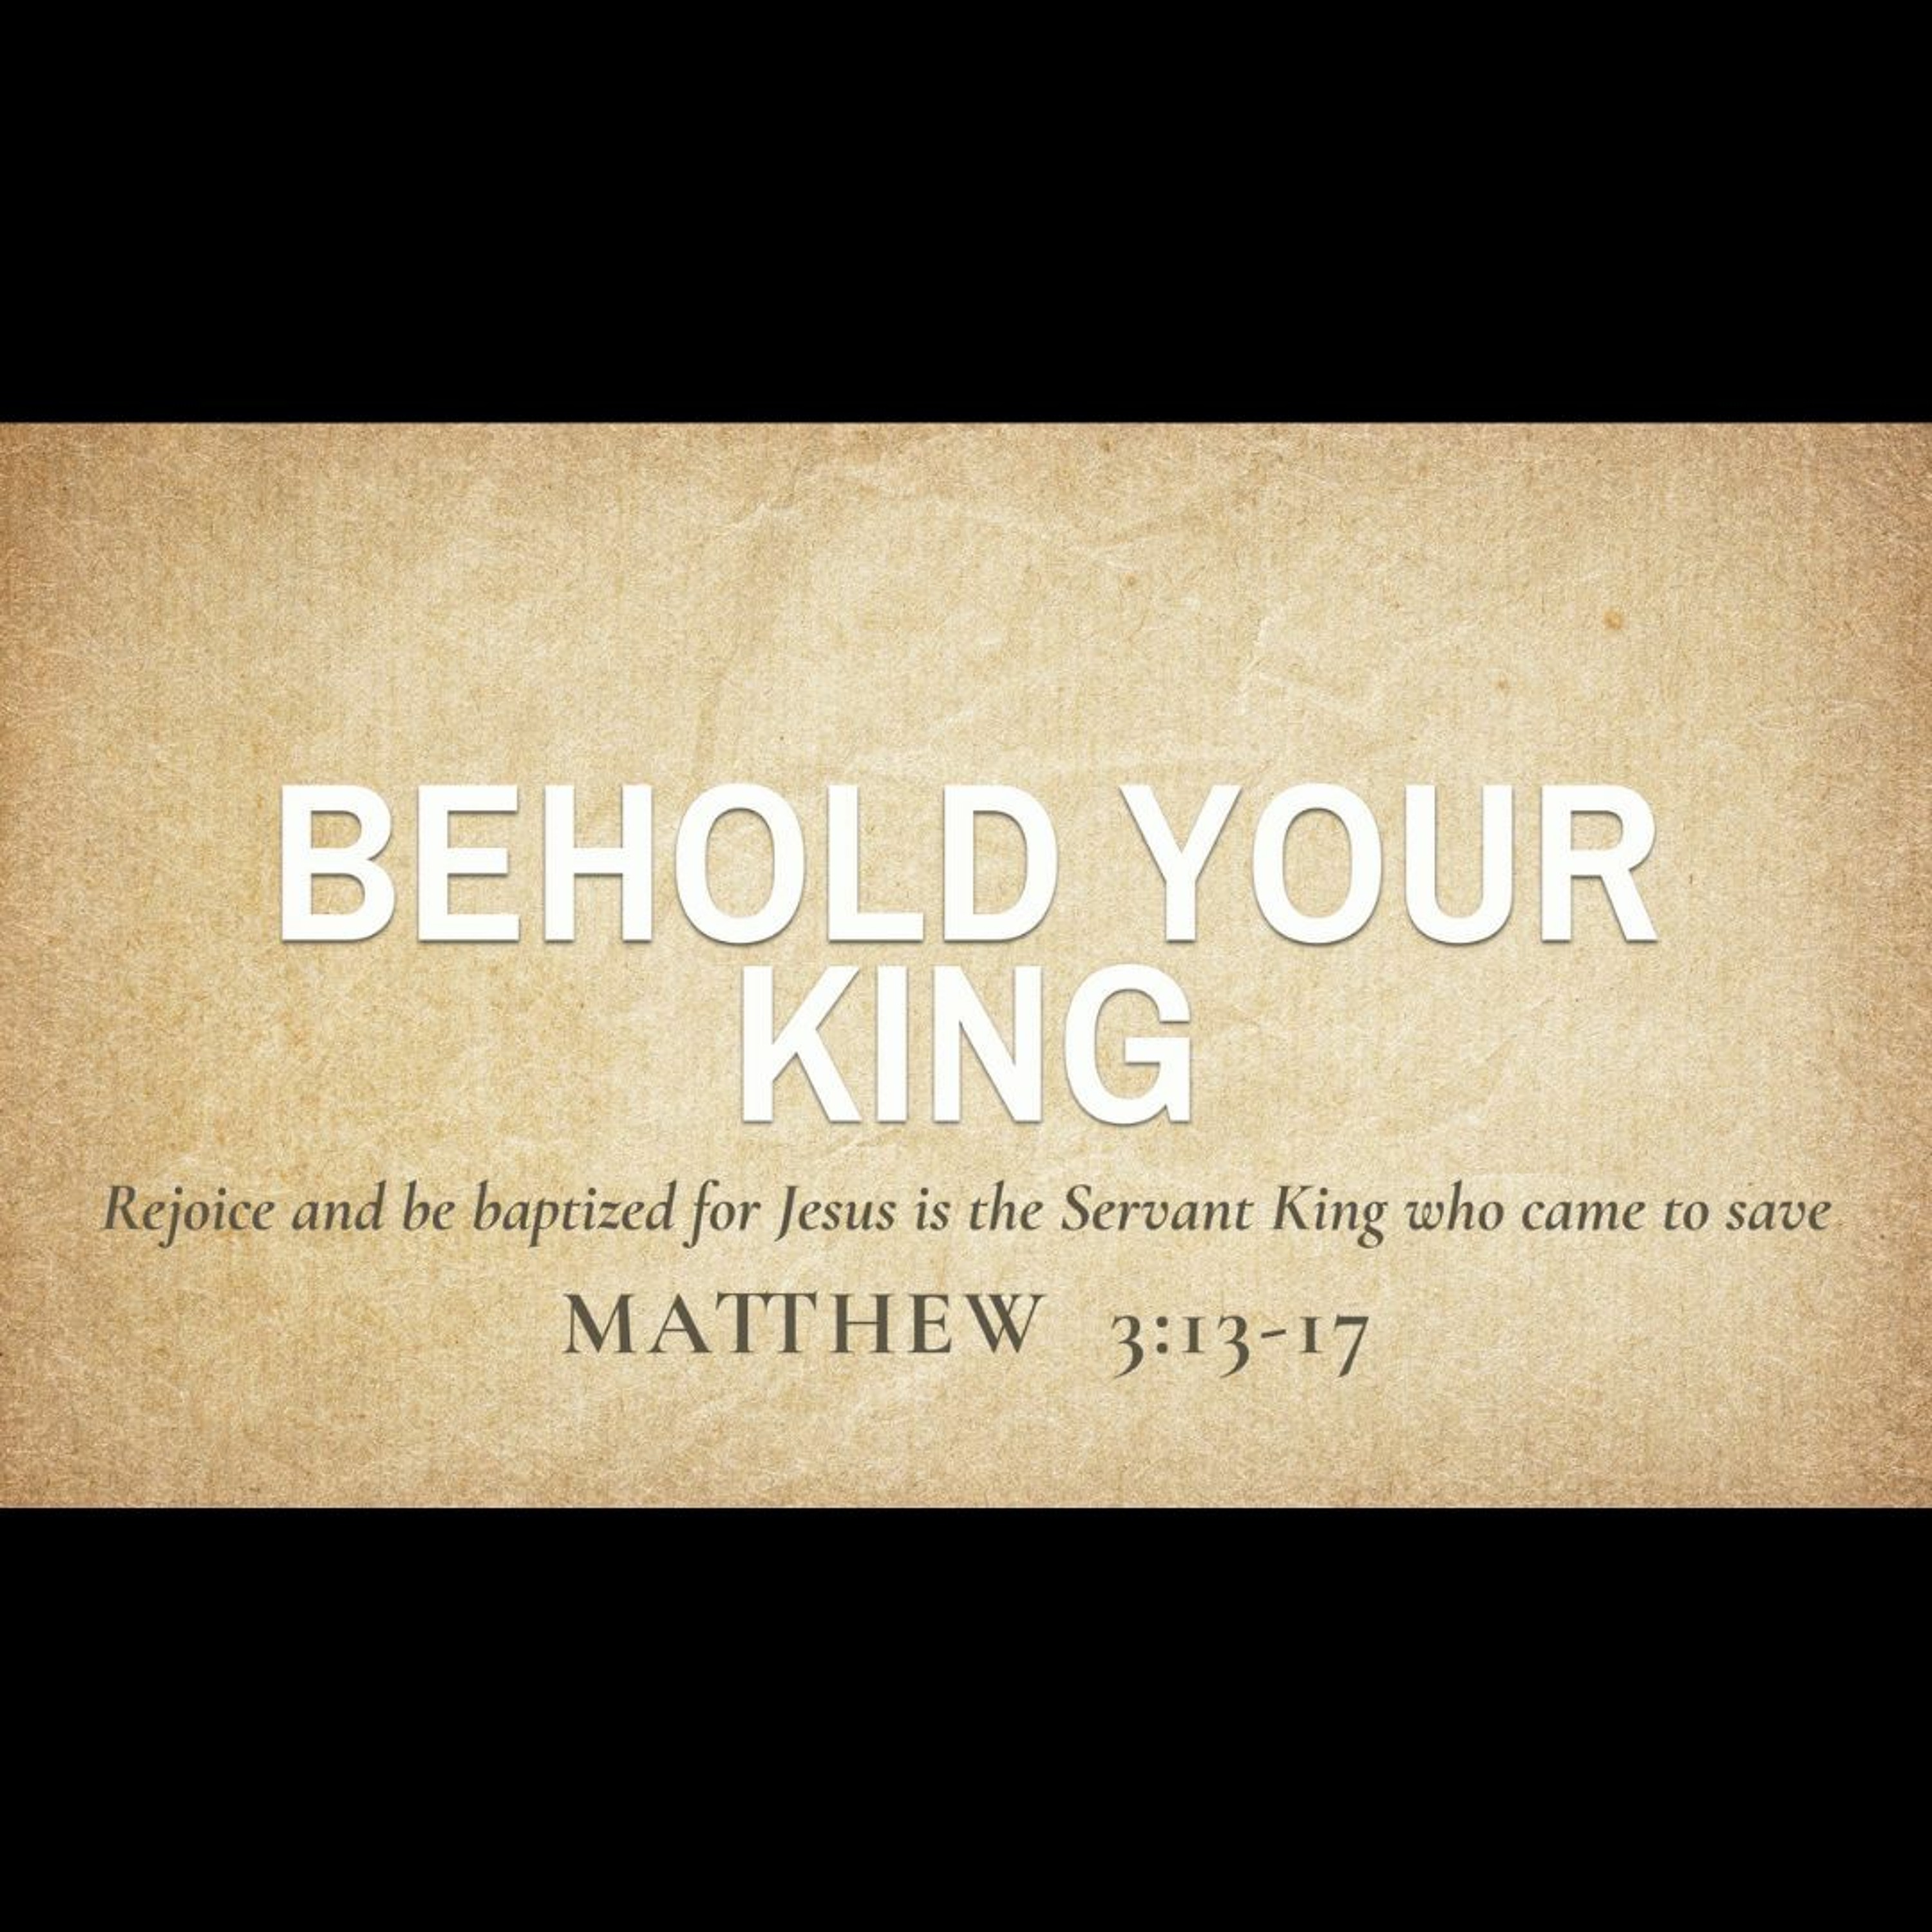 Behold Your King (Matthew 3:13-17)